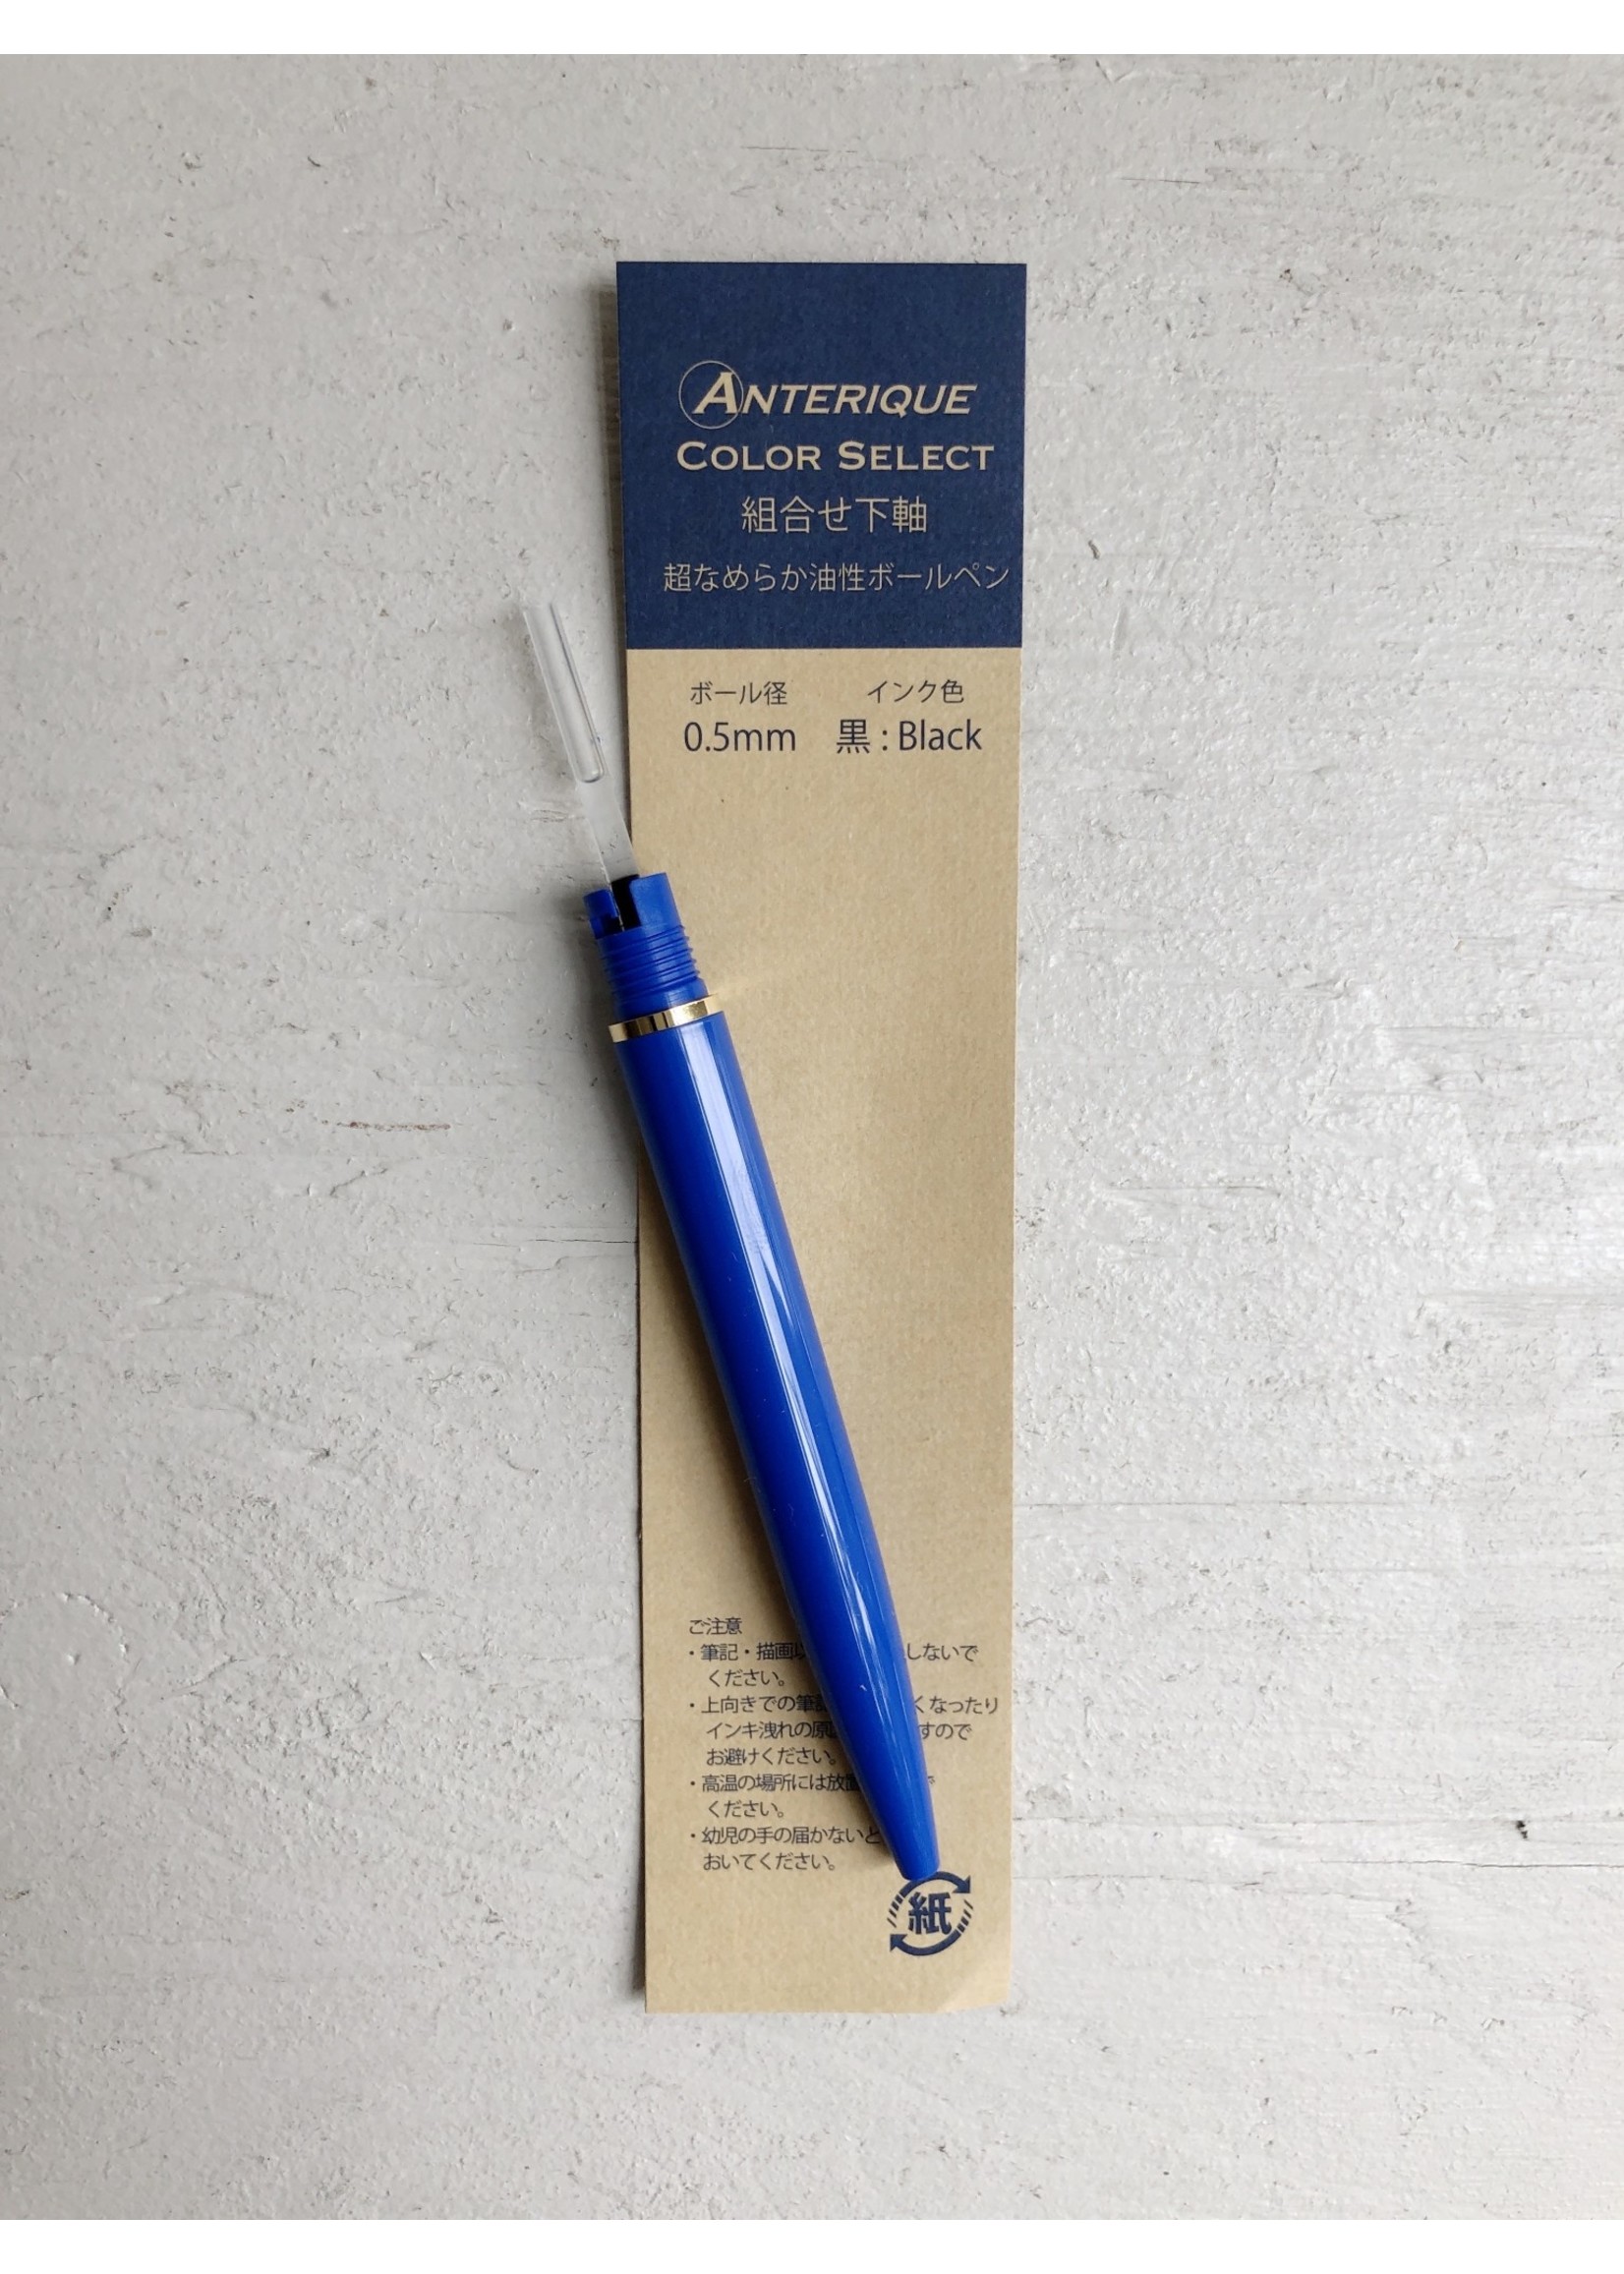 Anterique Lower Body Ballpoint Pen by Anterique